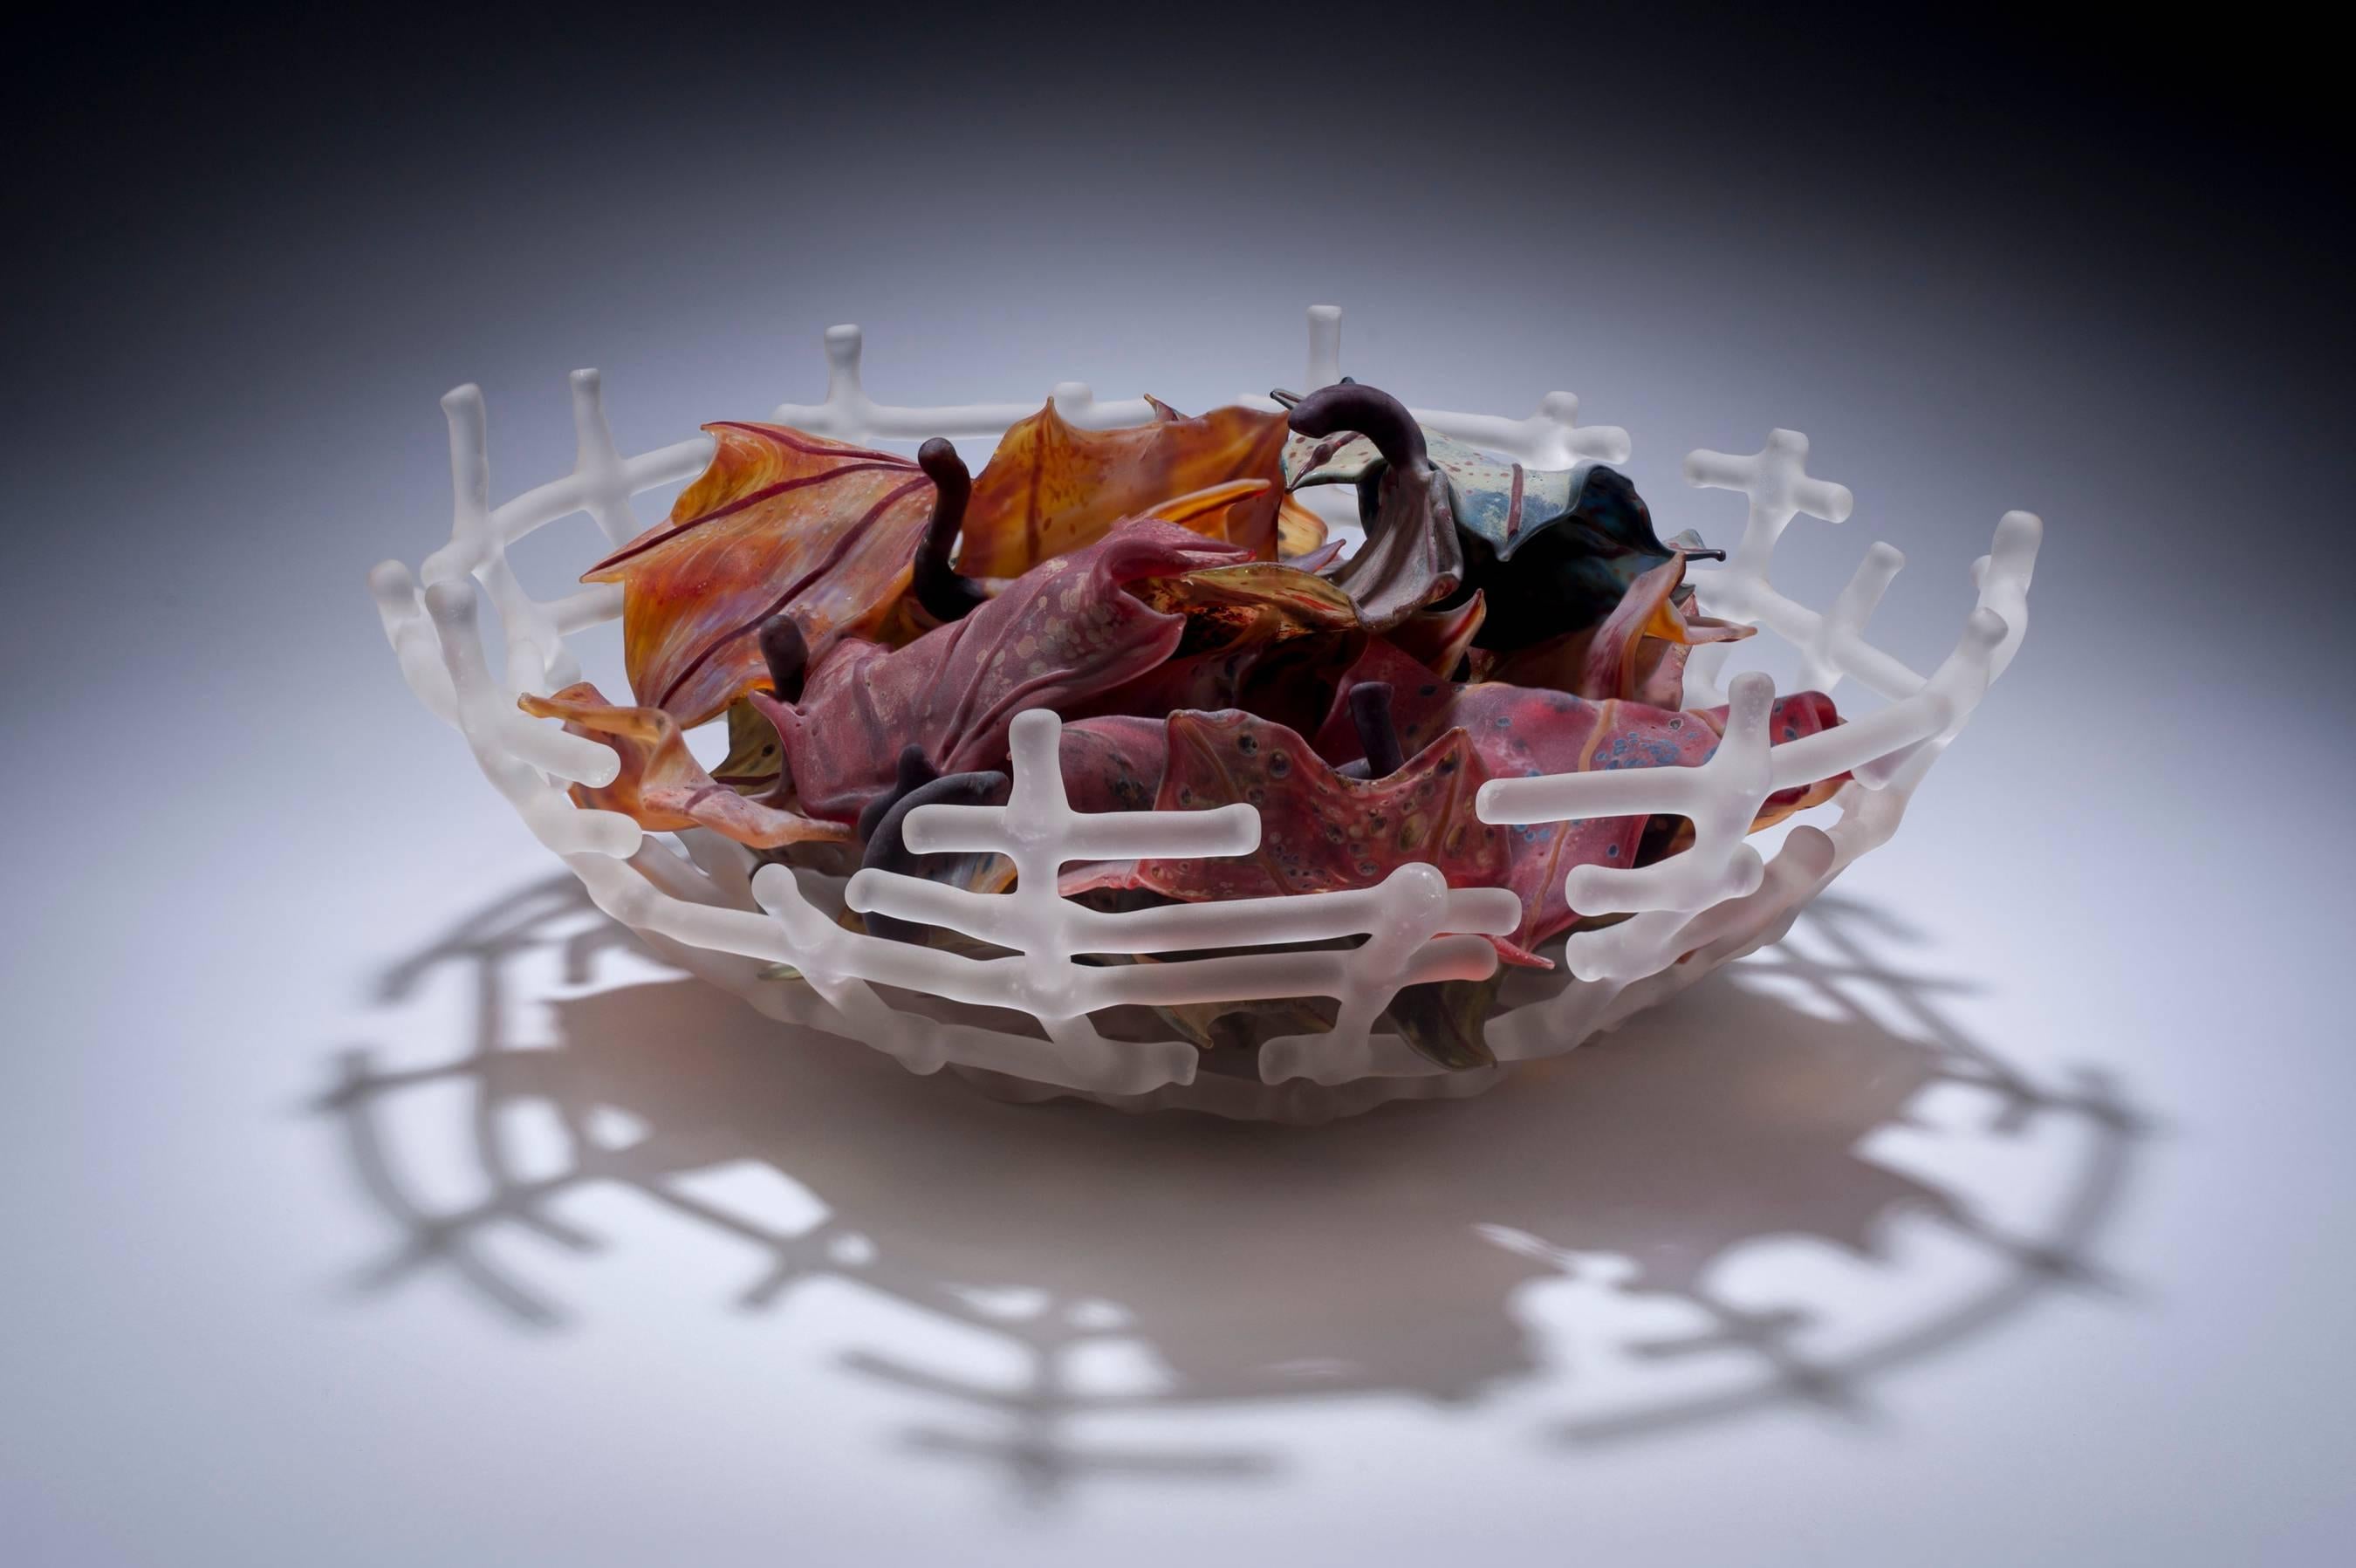 Elizabeth Ryland Mears Still-Life Sculpture - Bowl of Autumn